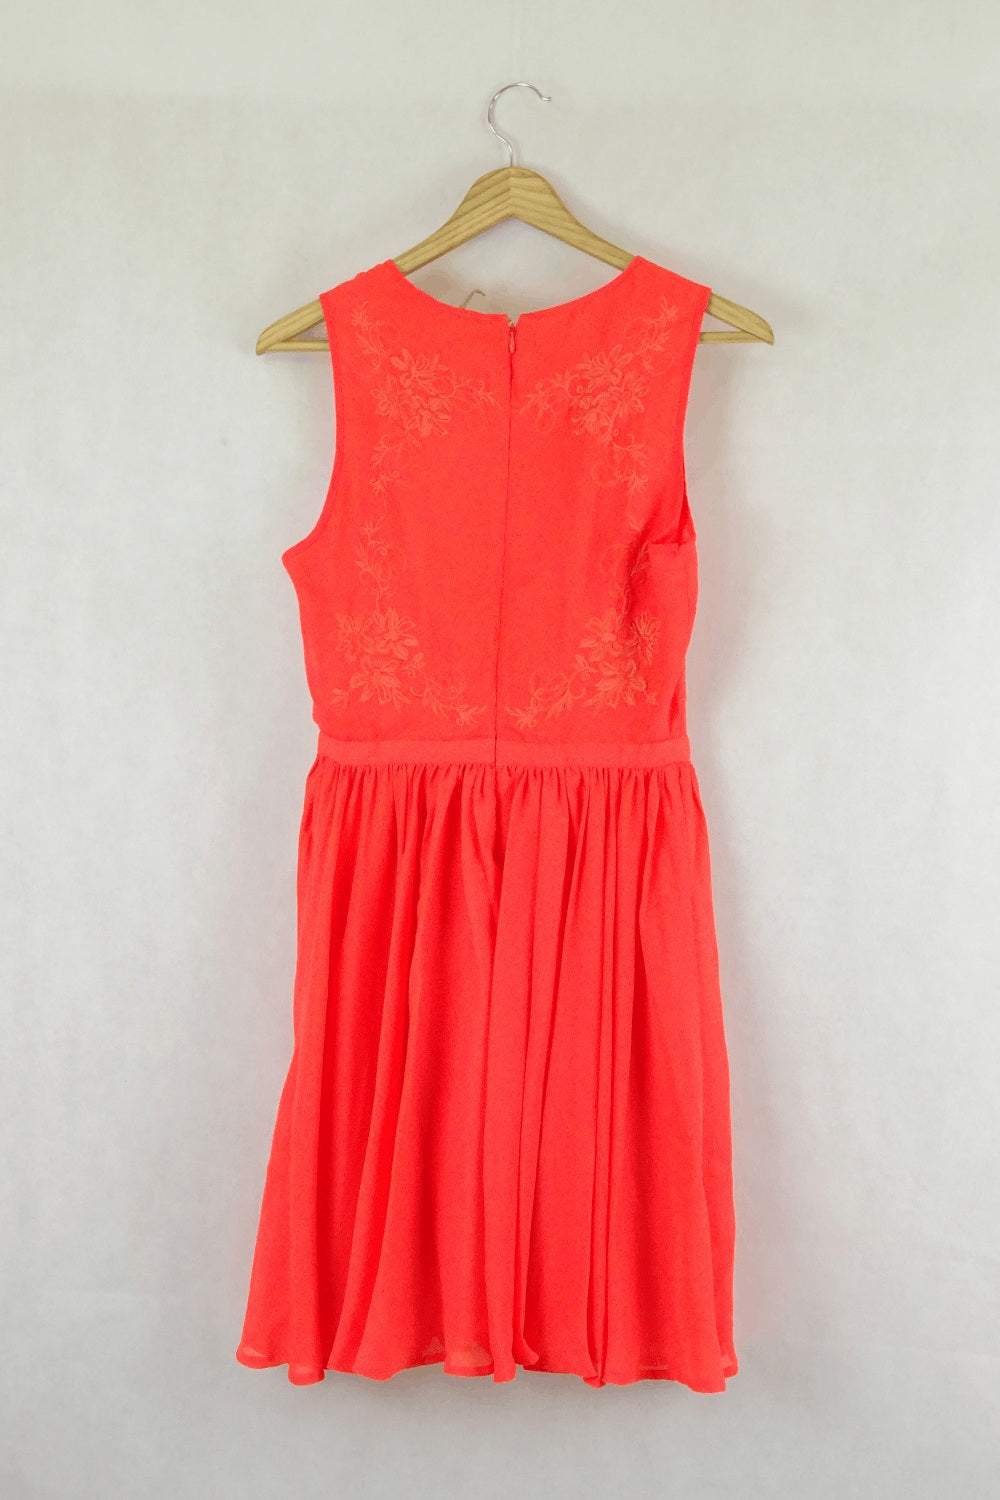 Tokito Fit And Flare Orange Embroidered Sleeveless Dress 8